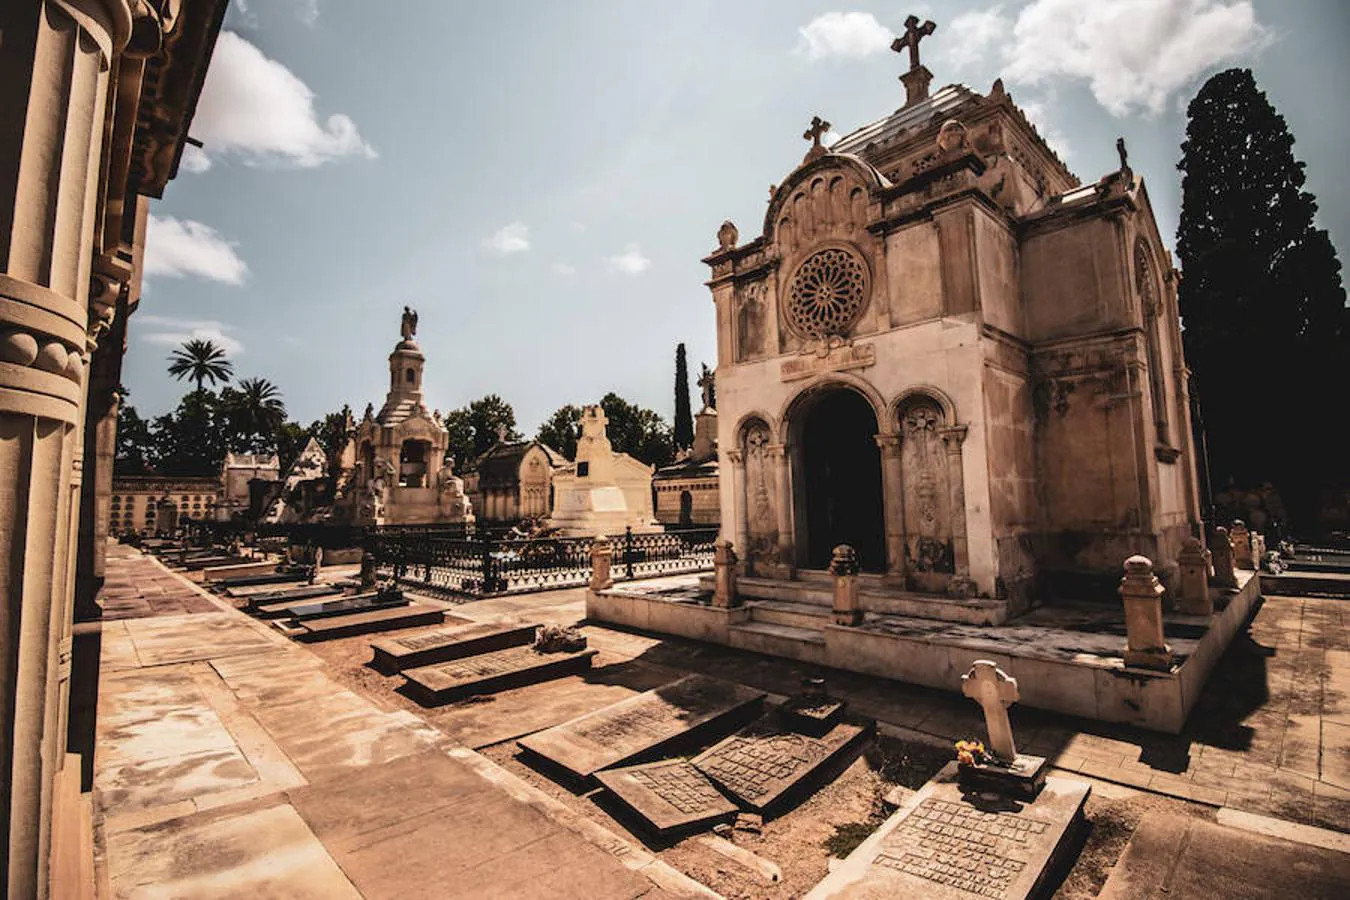 Libro de visita al Cementerio San Fernando. - Picture of Cemetery of San  Fernando, Mexico City - Tripadvisor